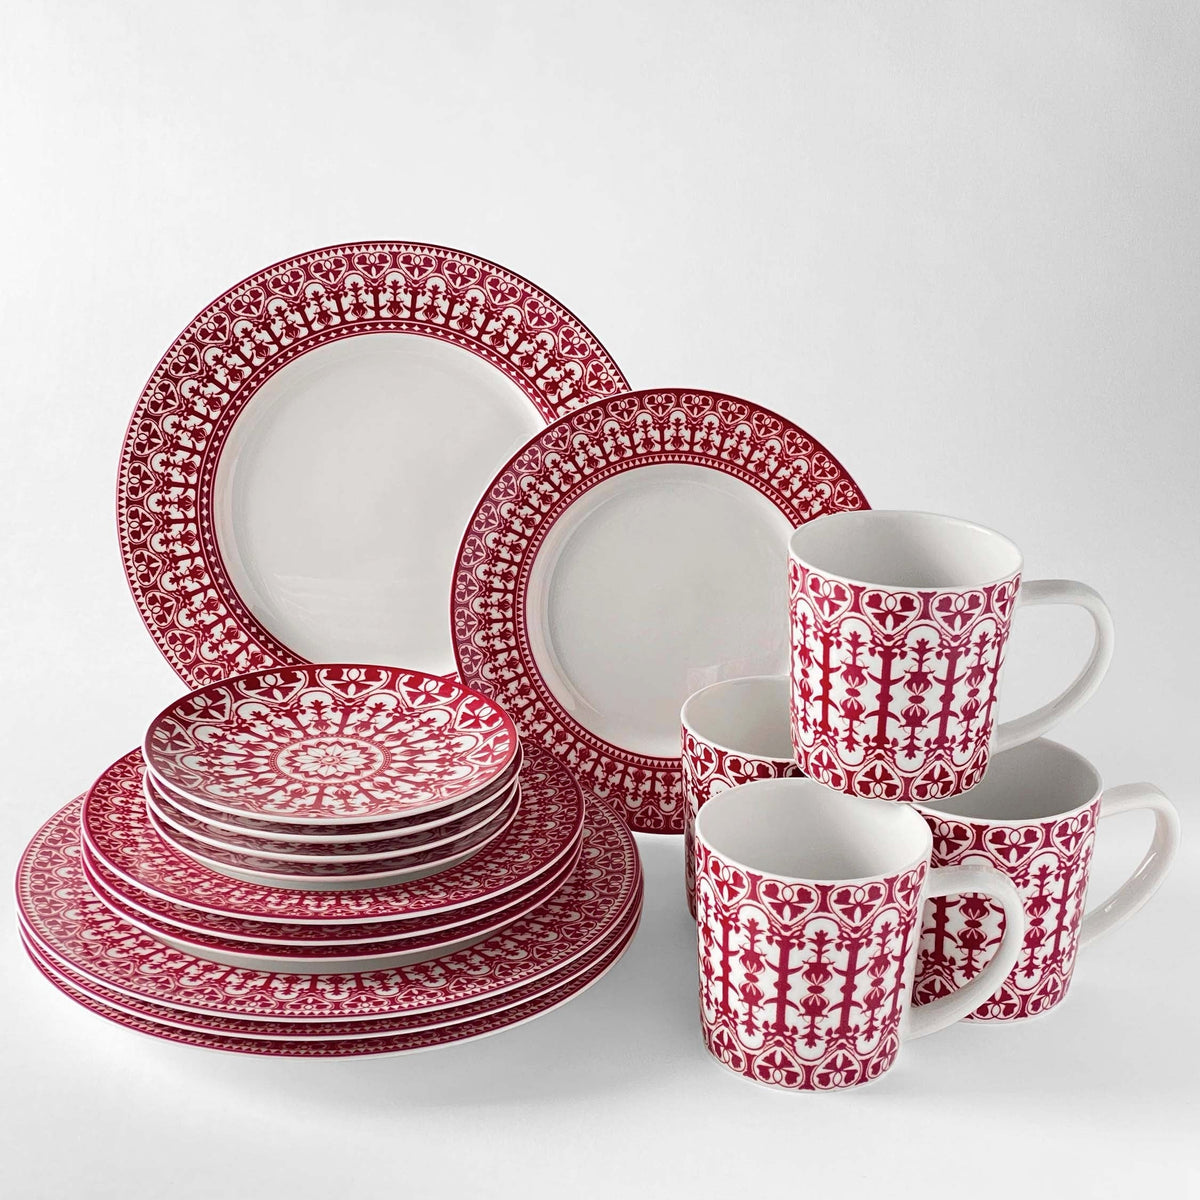 A set of Casablanca Crimson Salad Plate by Caskata Artisanal Home porcelain dinnerware on a white surface.